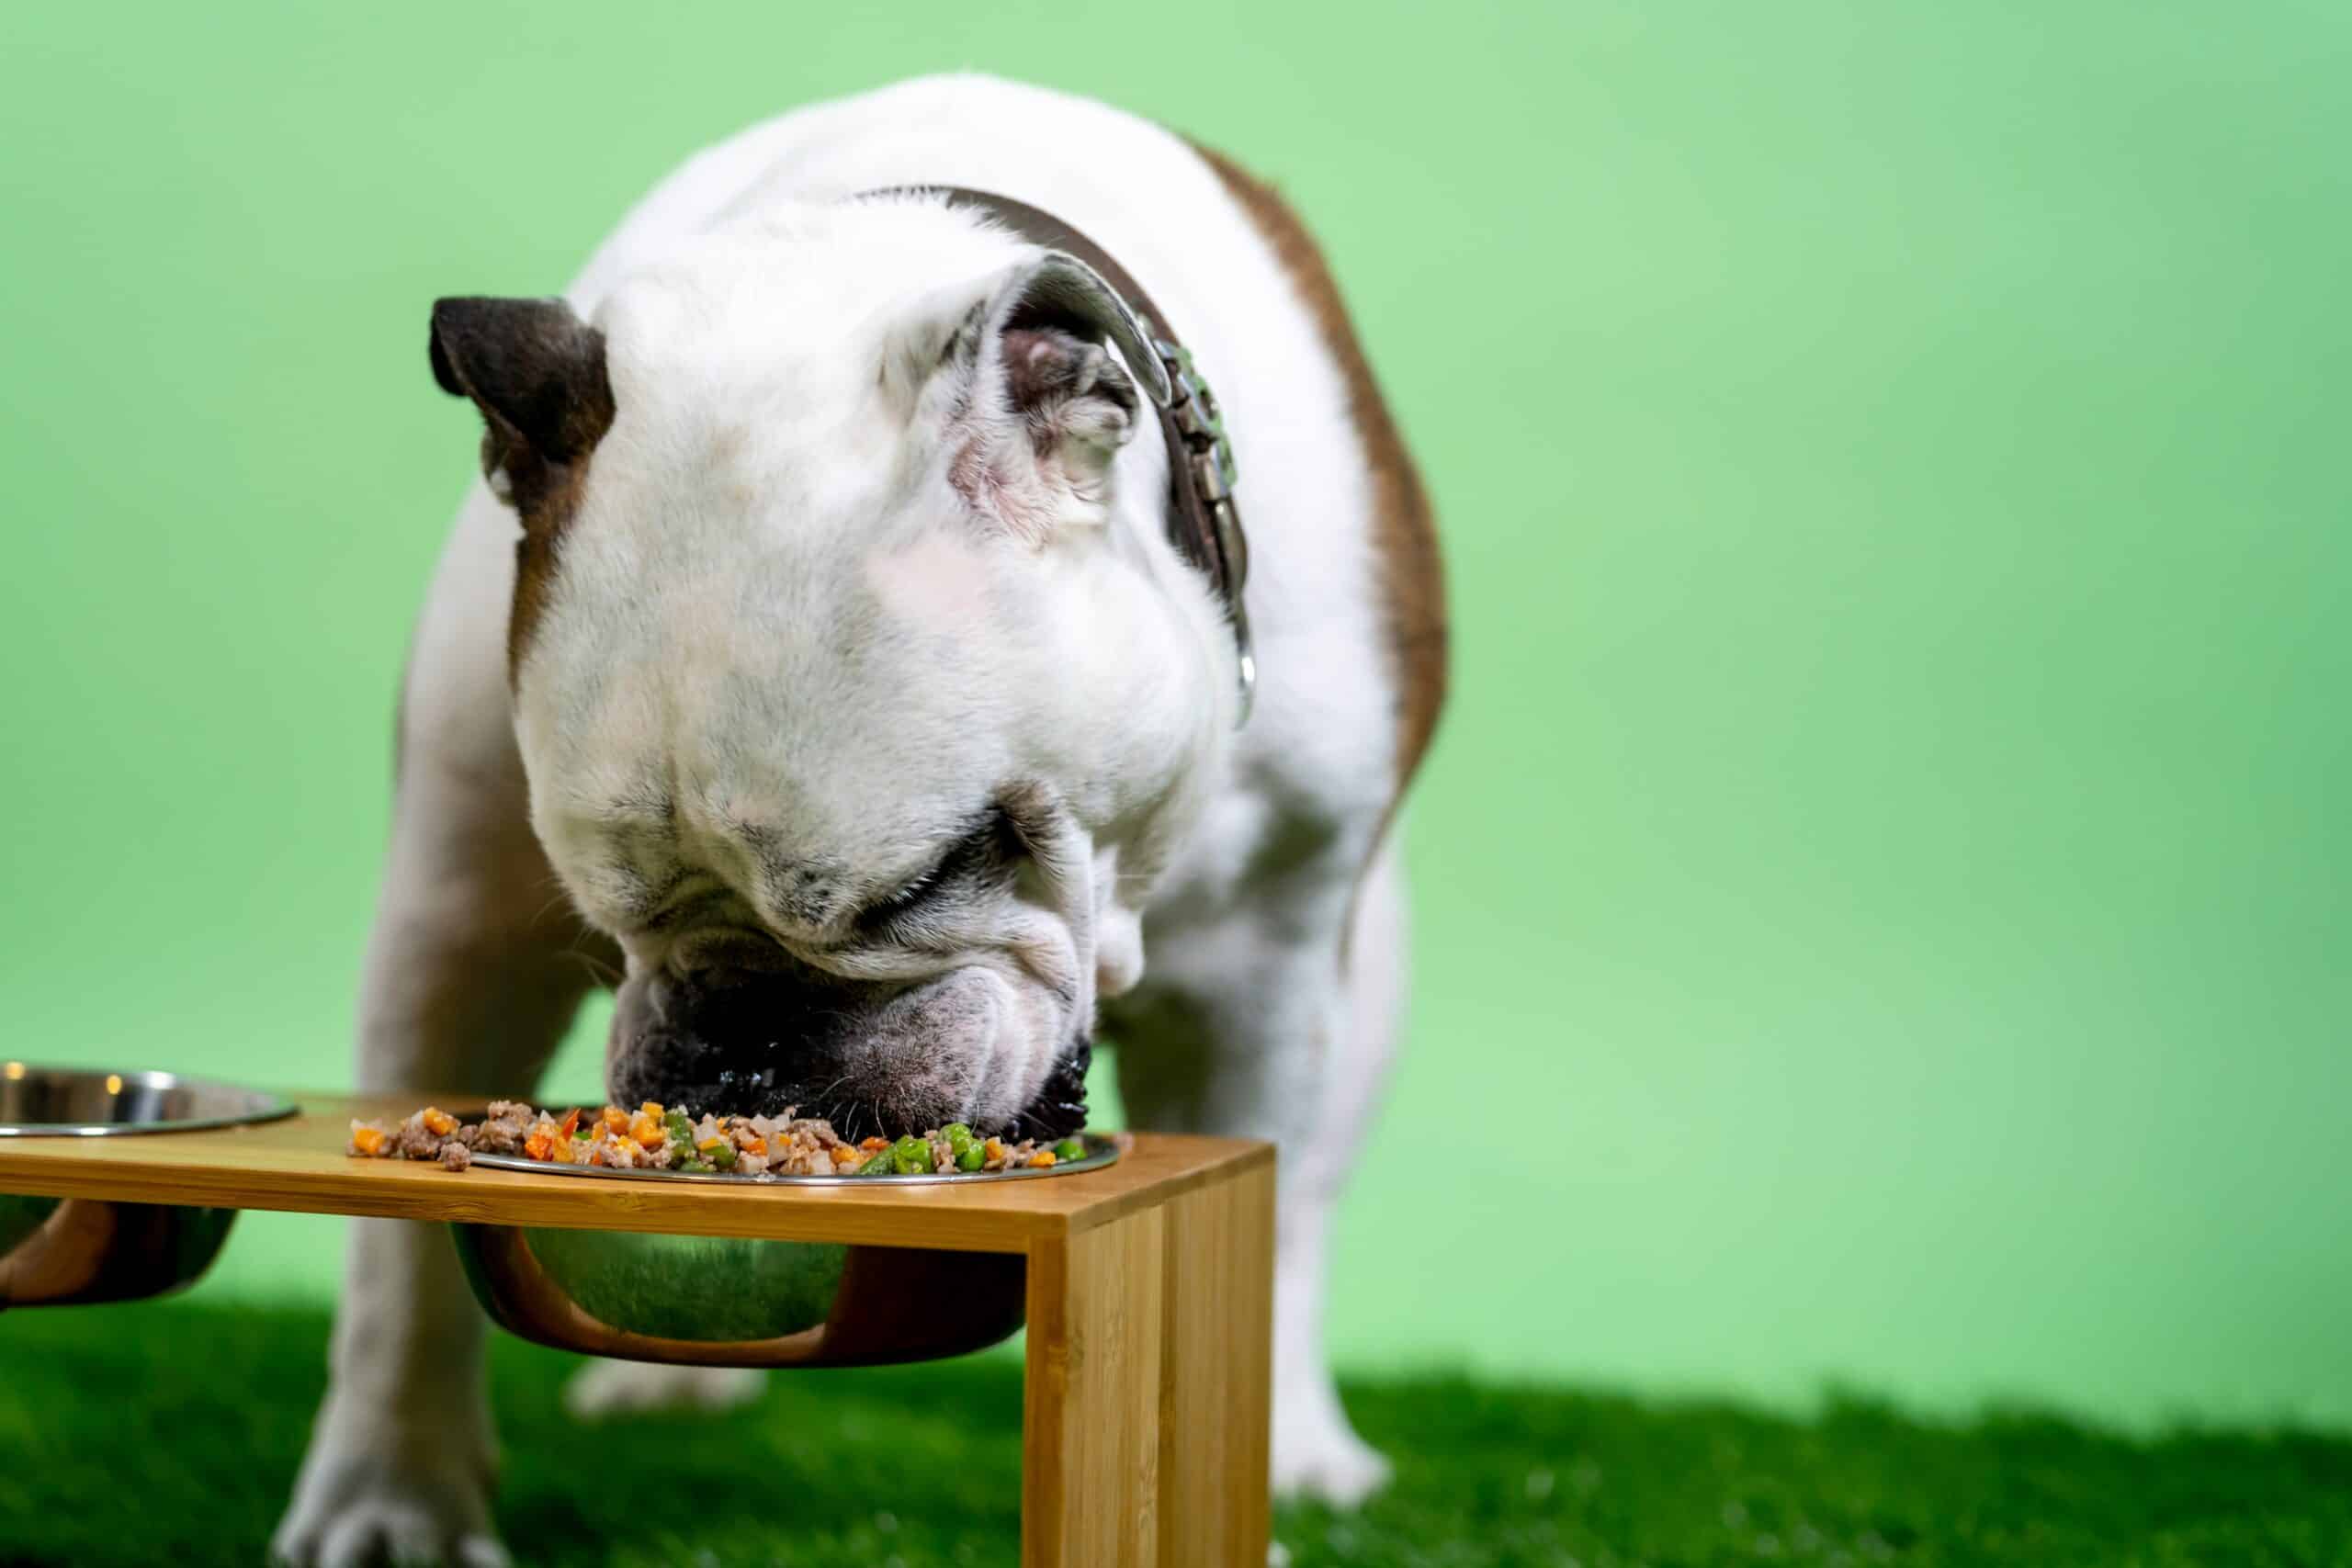 Bulldog eating dog food